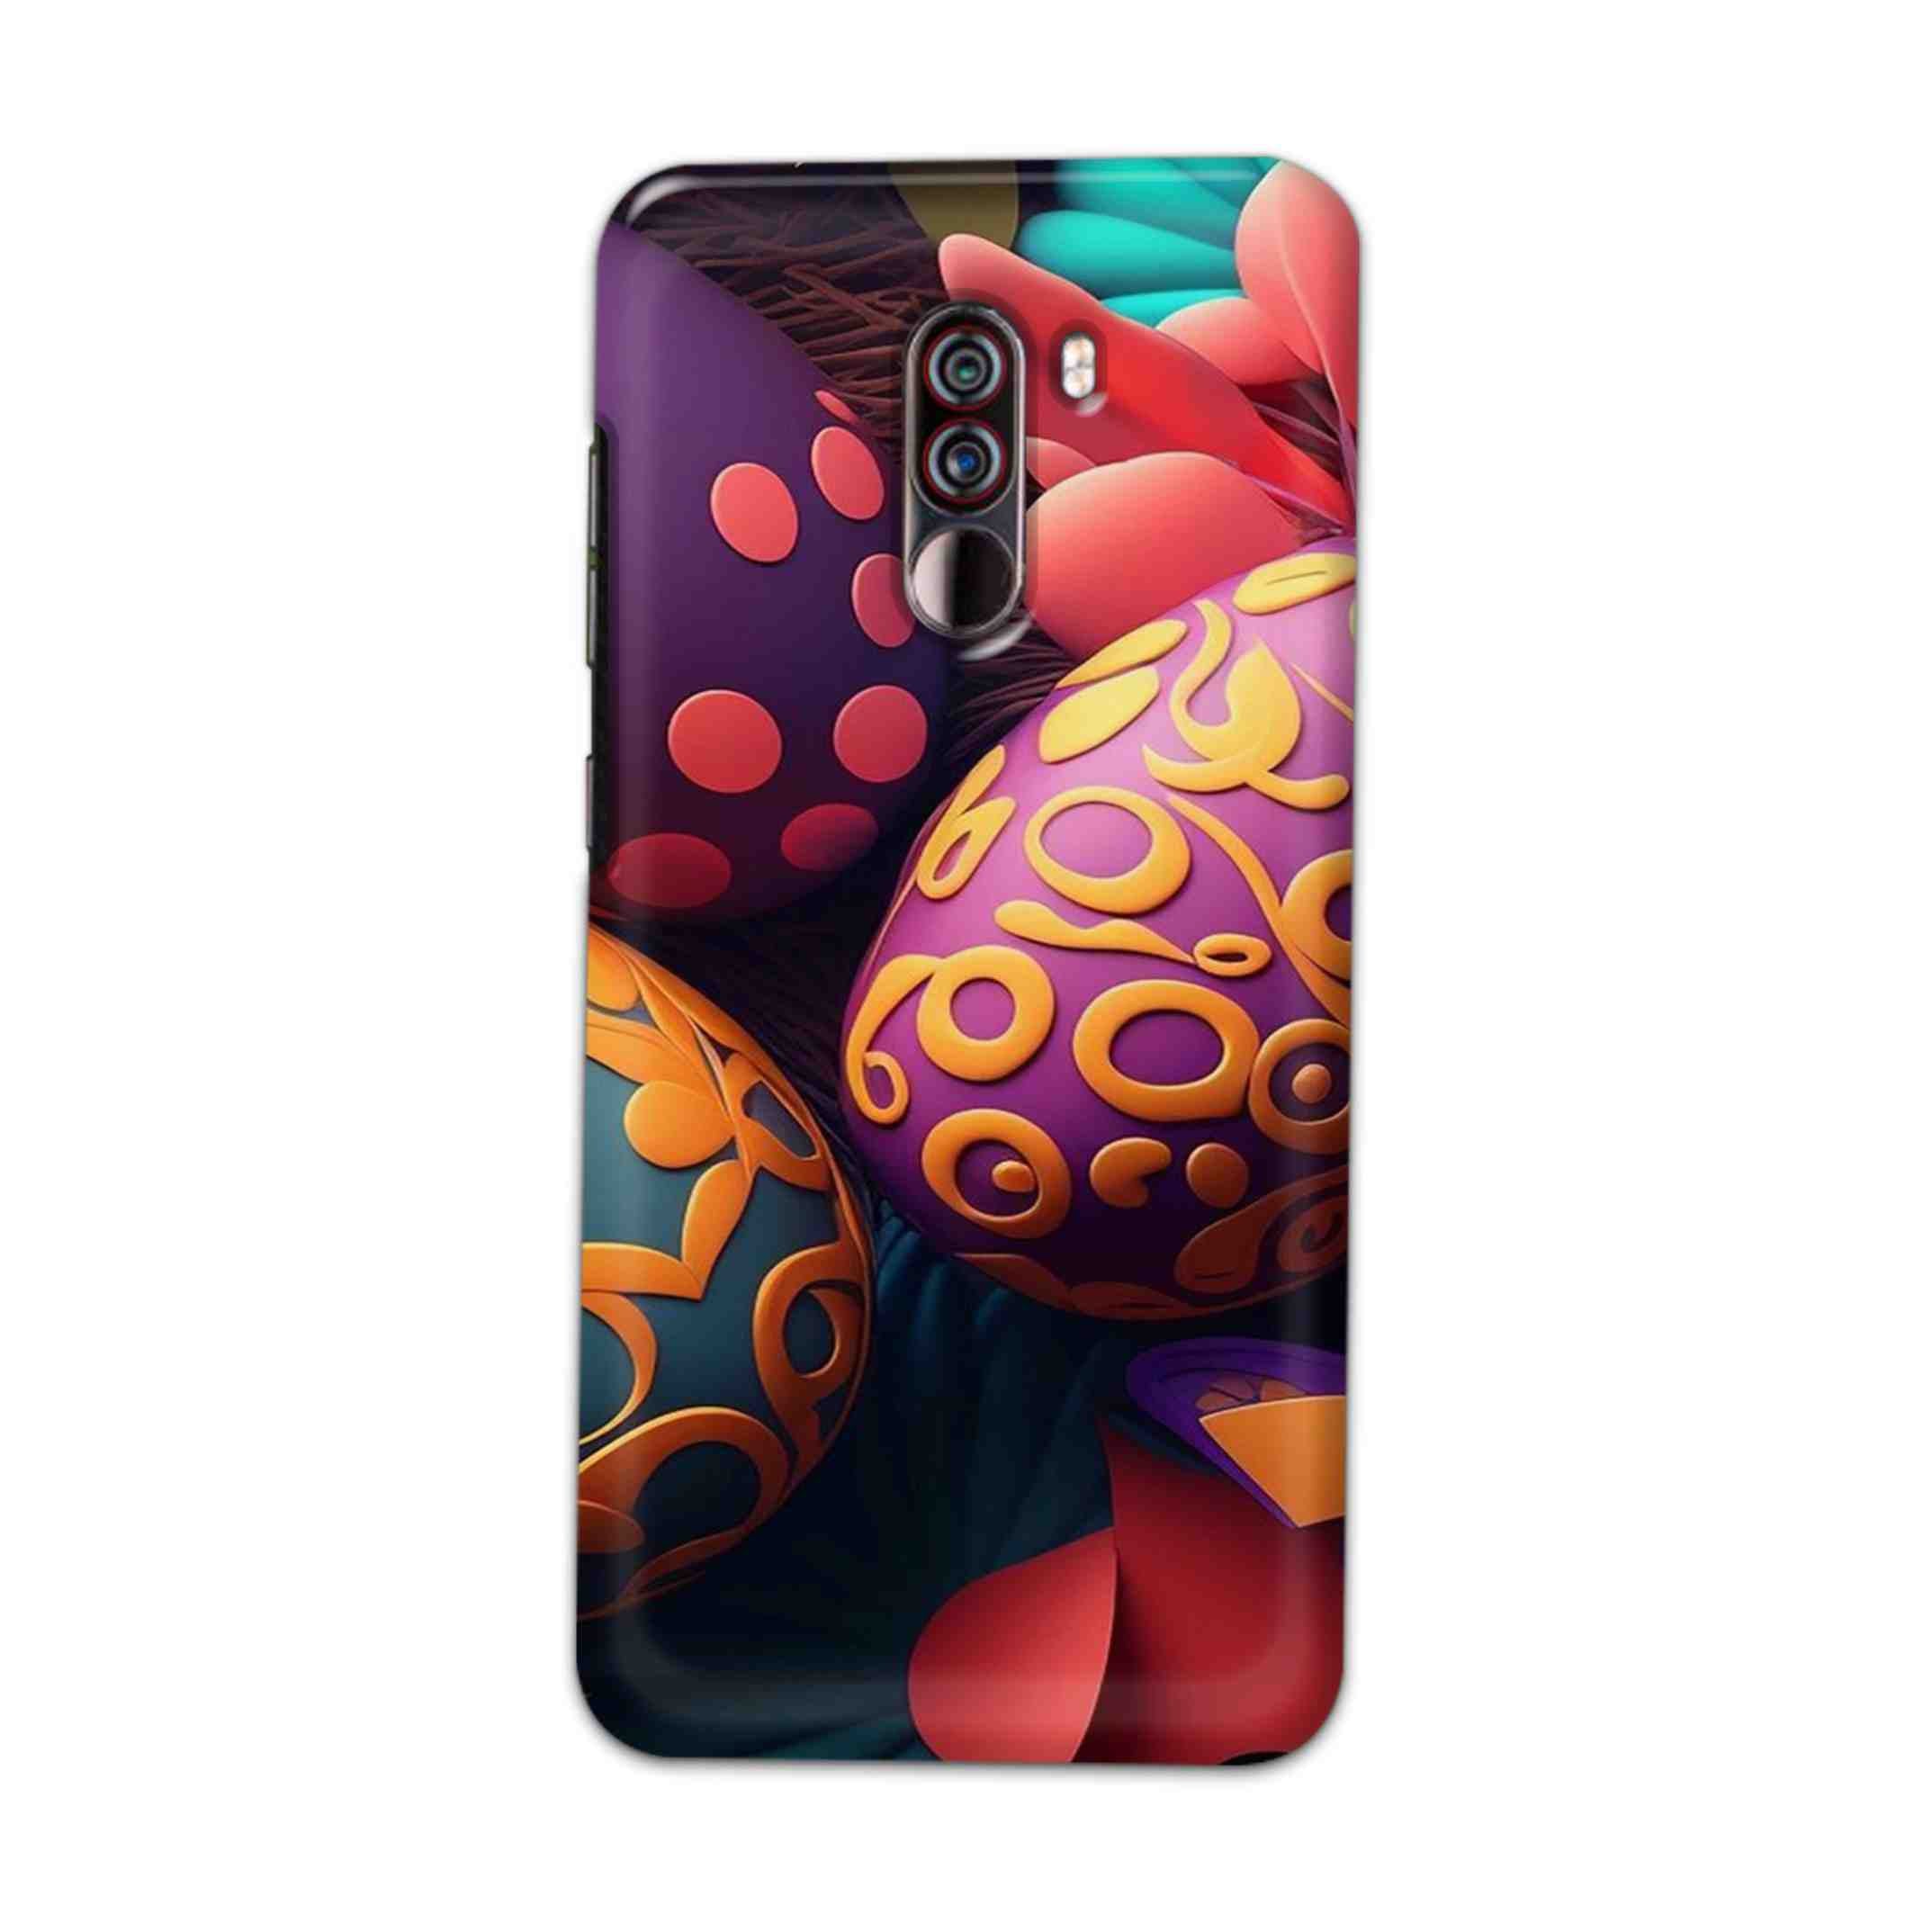 Buy Easter Egg Hard Back Mobile Phone Case Cover For Xiaomi Pocophone F1 Online